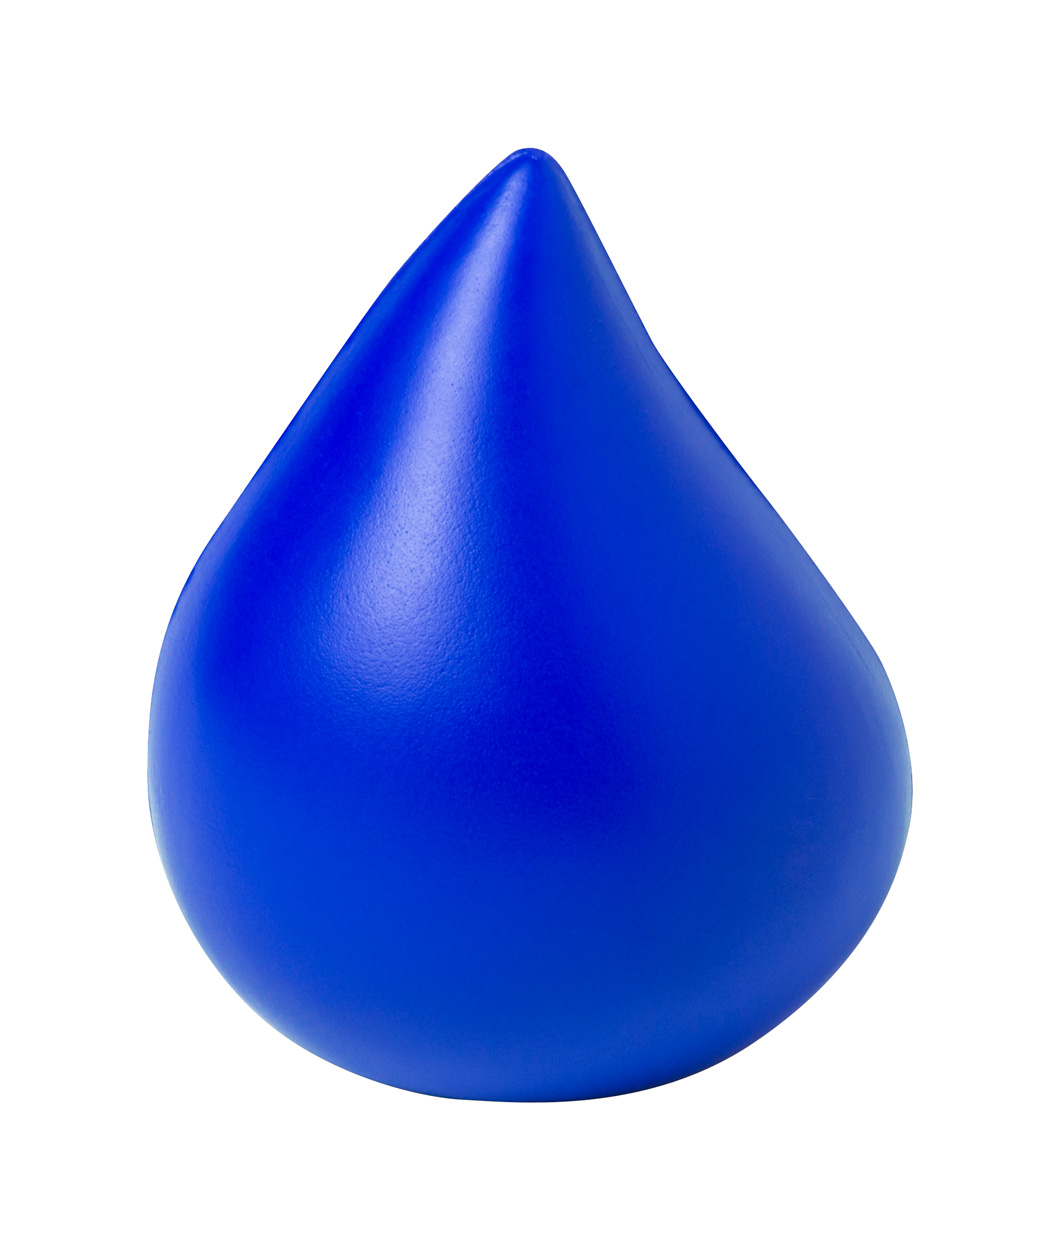 Anti-stress tool GOTIN in the shape of a water drop